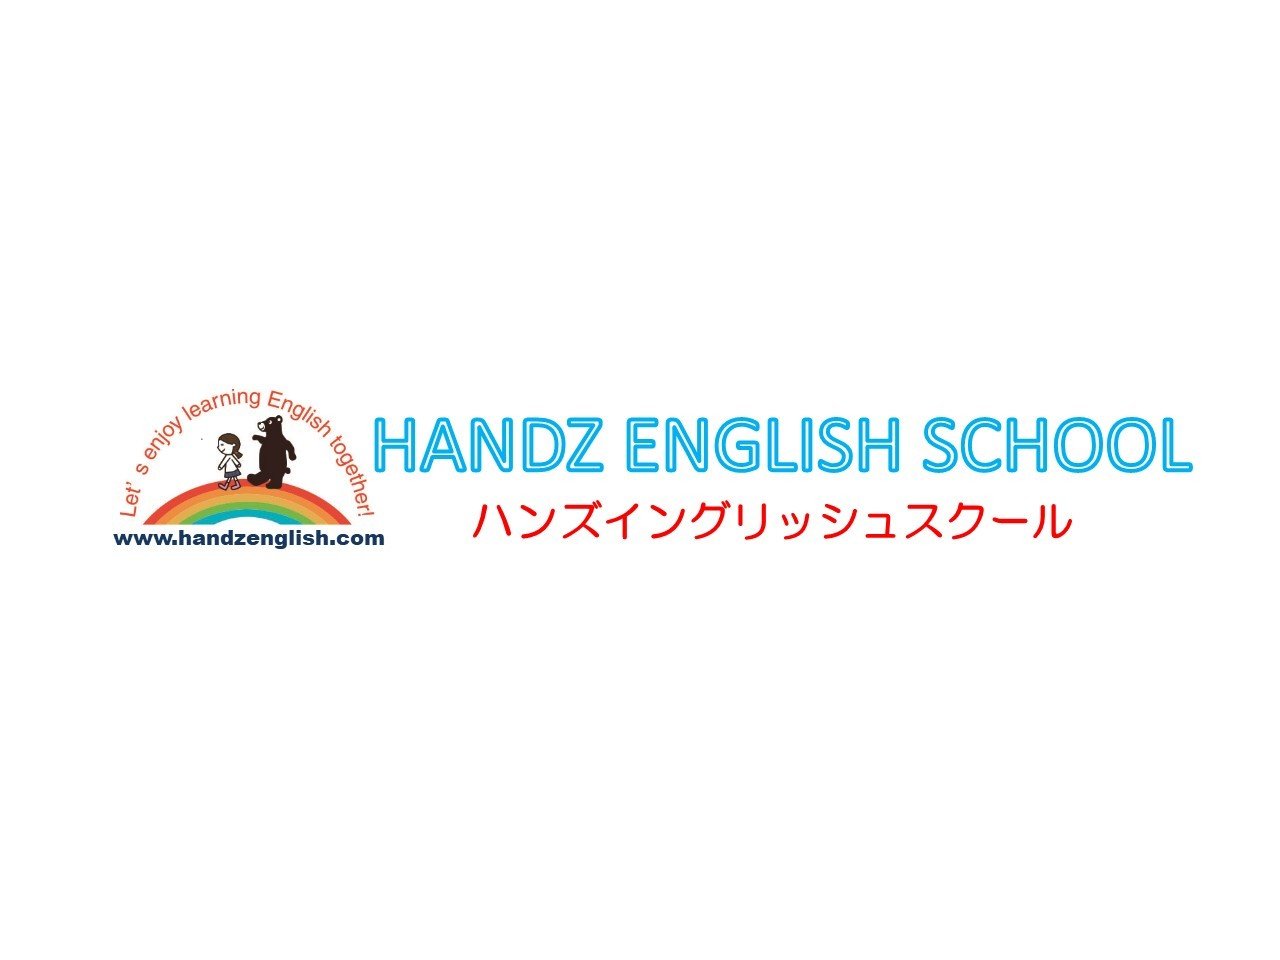 Handz English School featured image